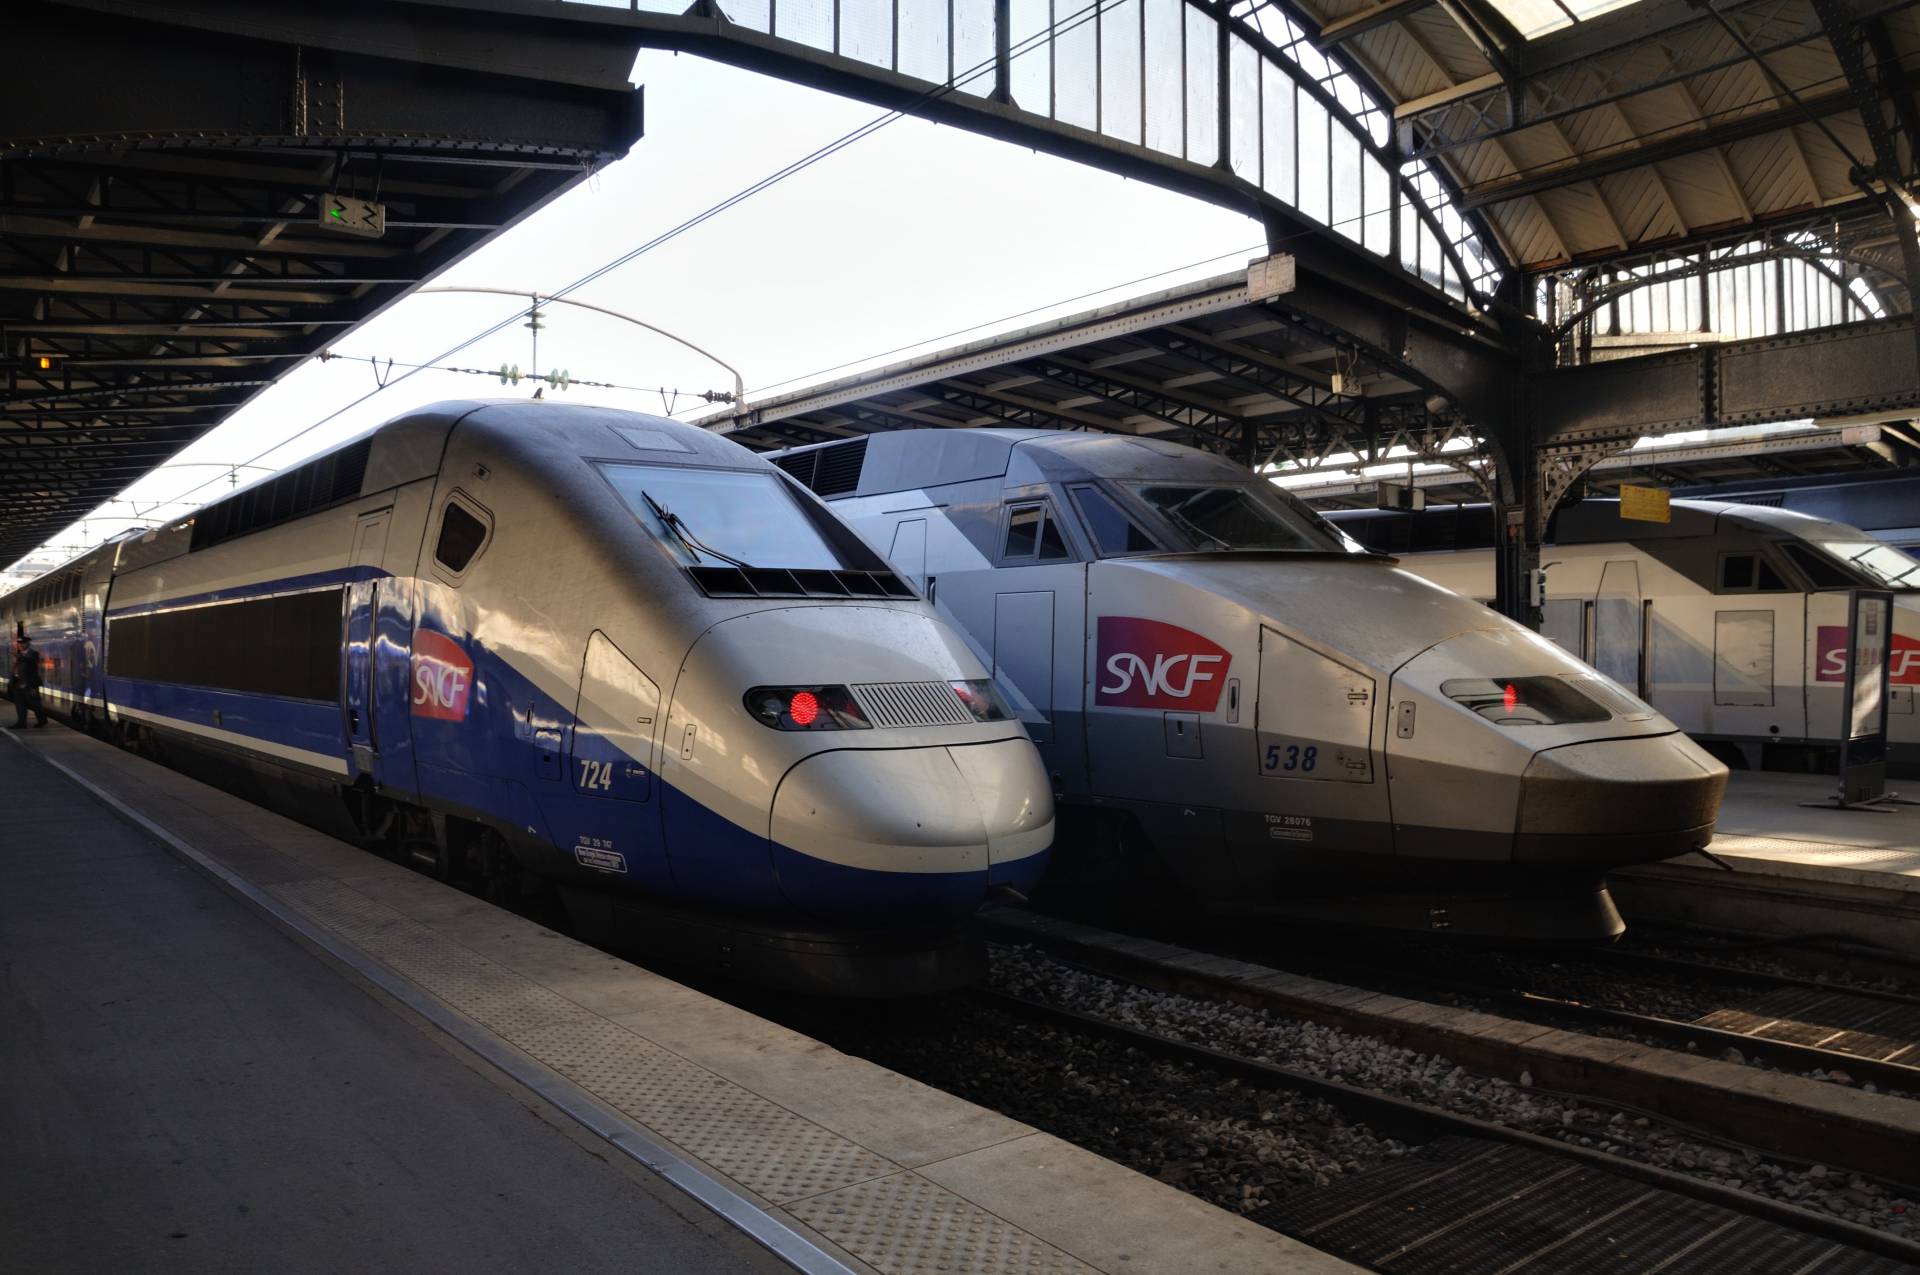 Segunda conexión por AVE entre España y Francia: París-Irún en julio en cinco horas